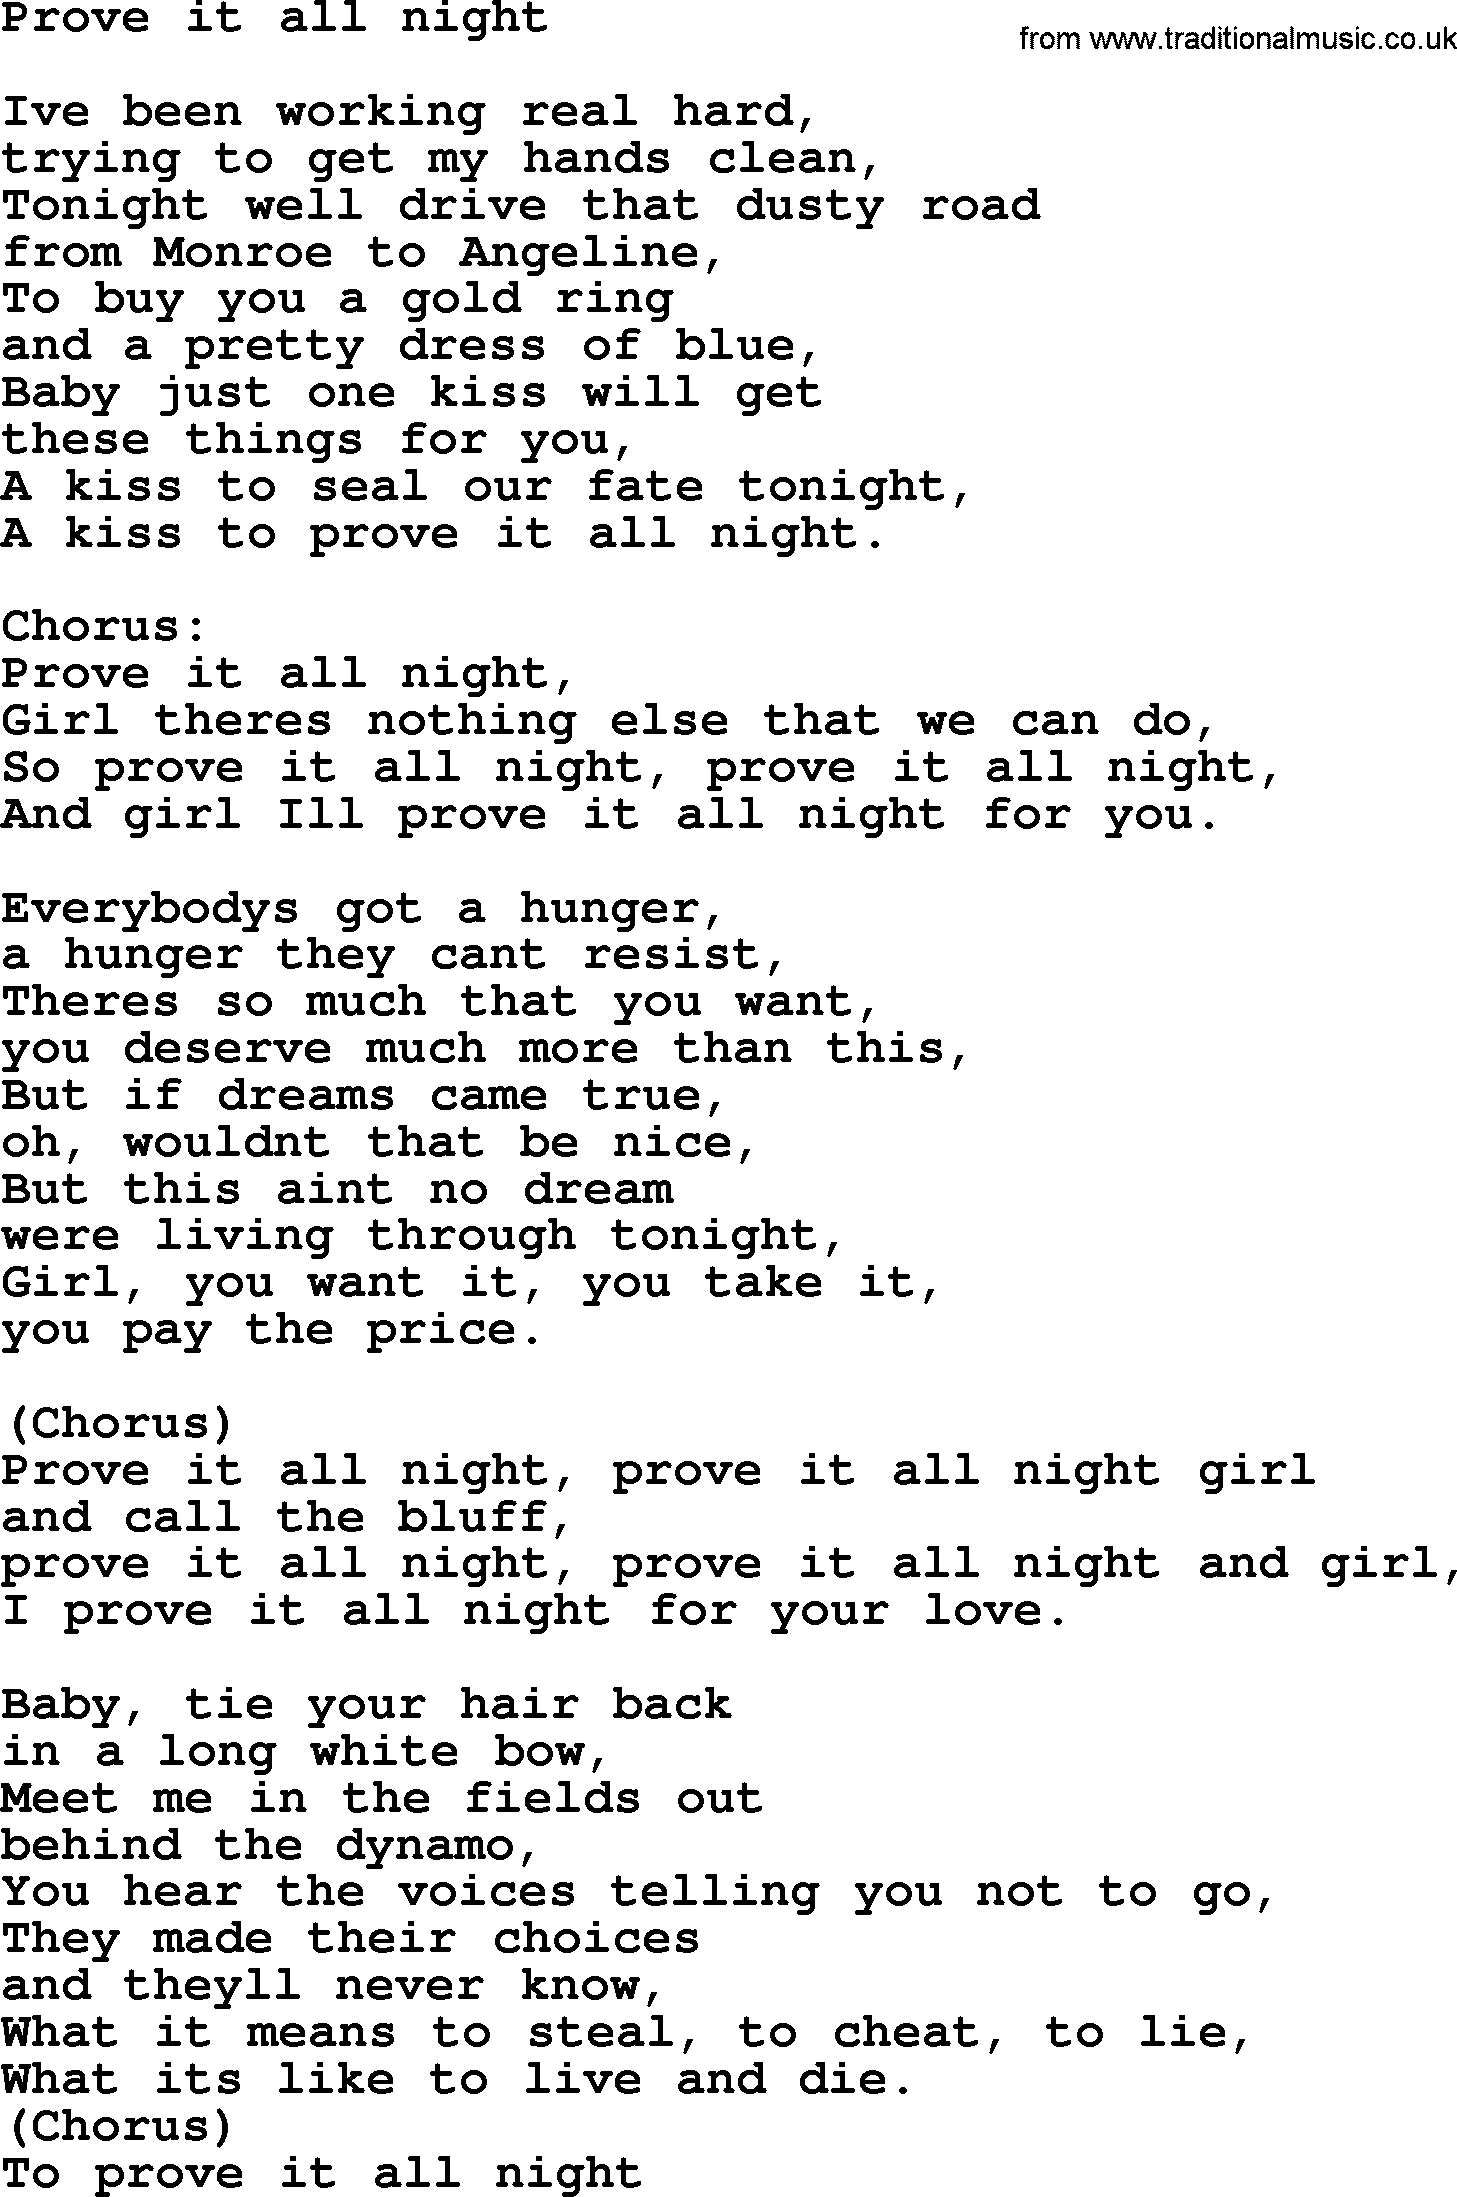 Bruce Springsteen song: Prove It All Night lyrics